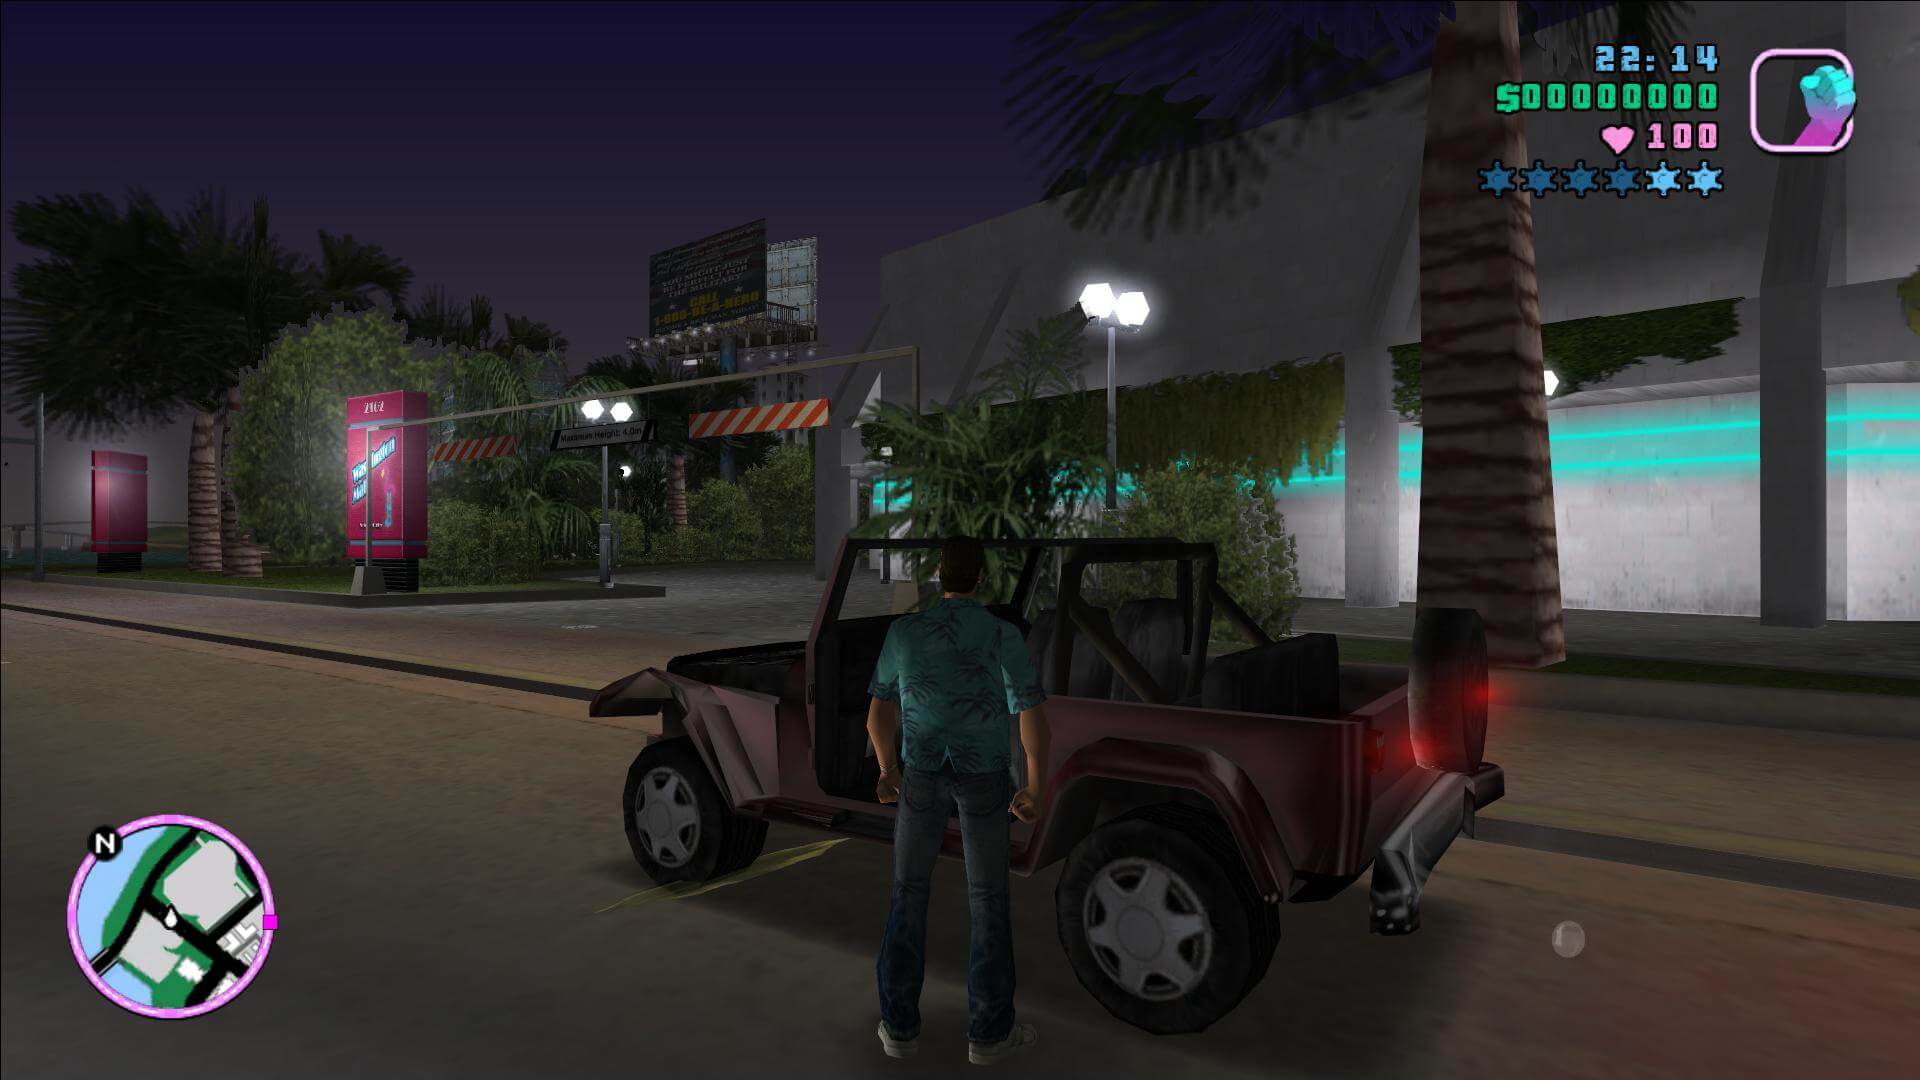 Grand Theft Auto: Vice City screenshot 1